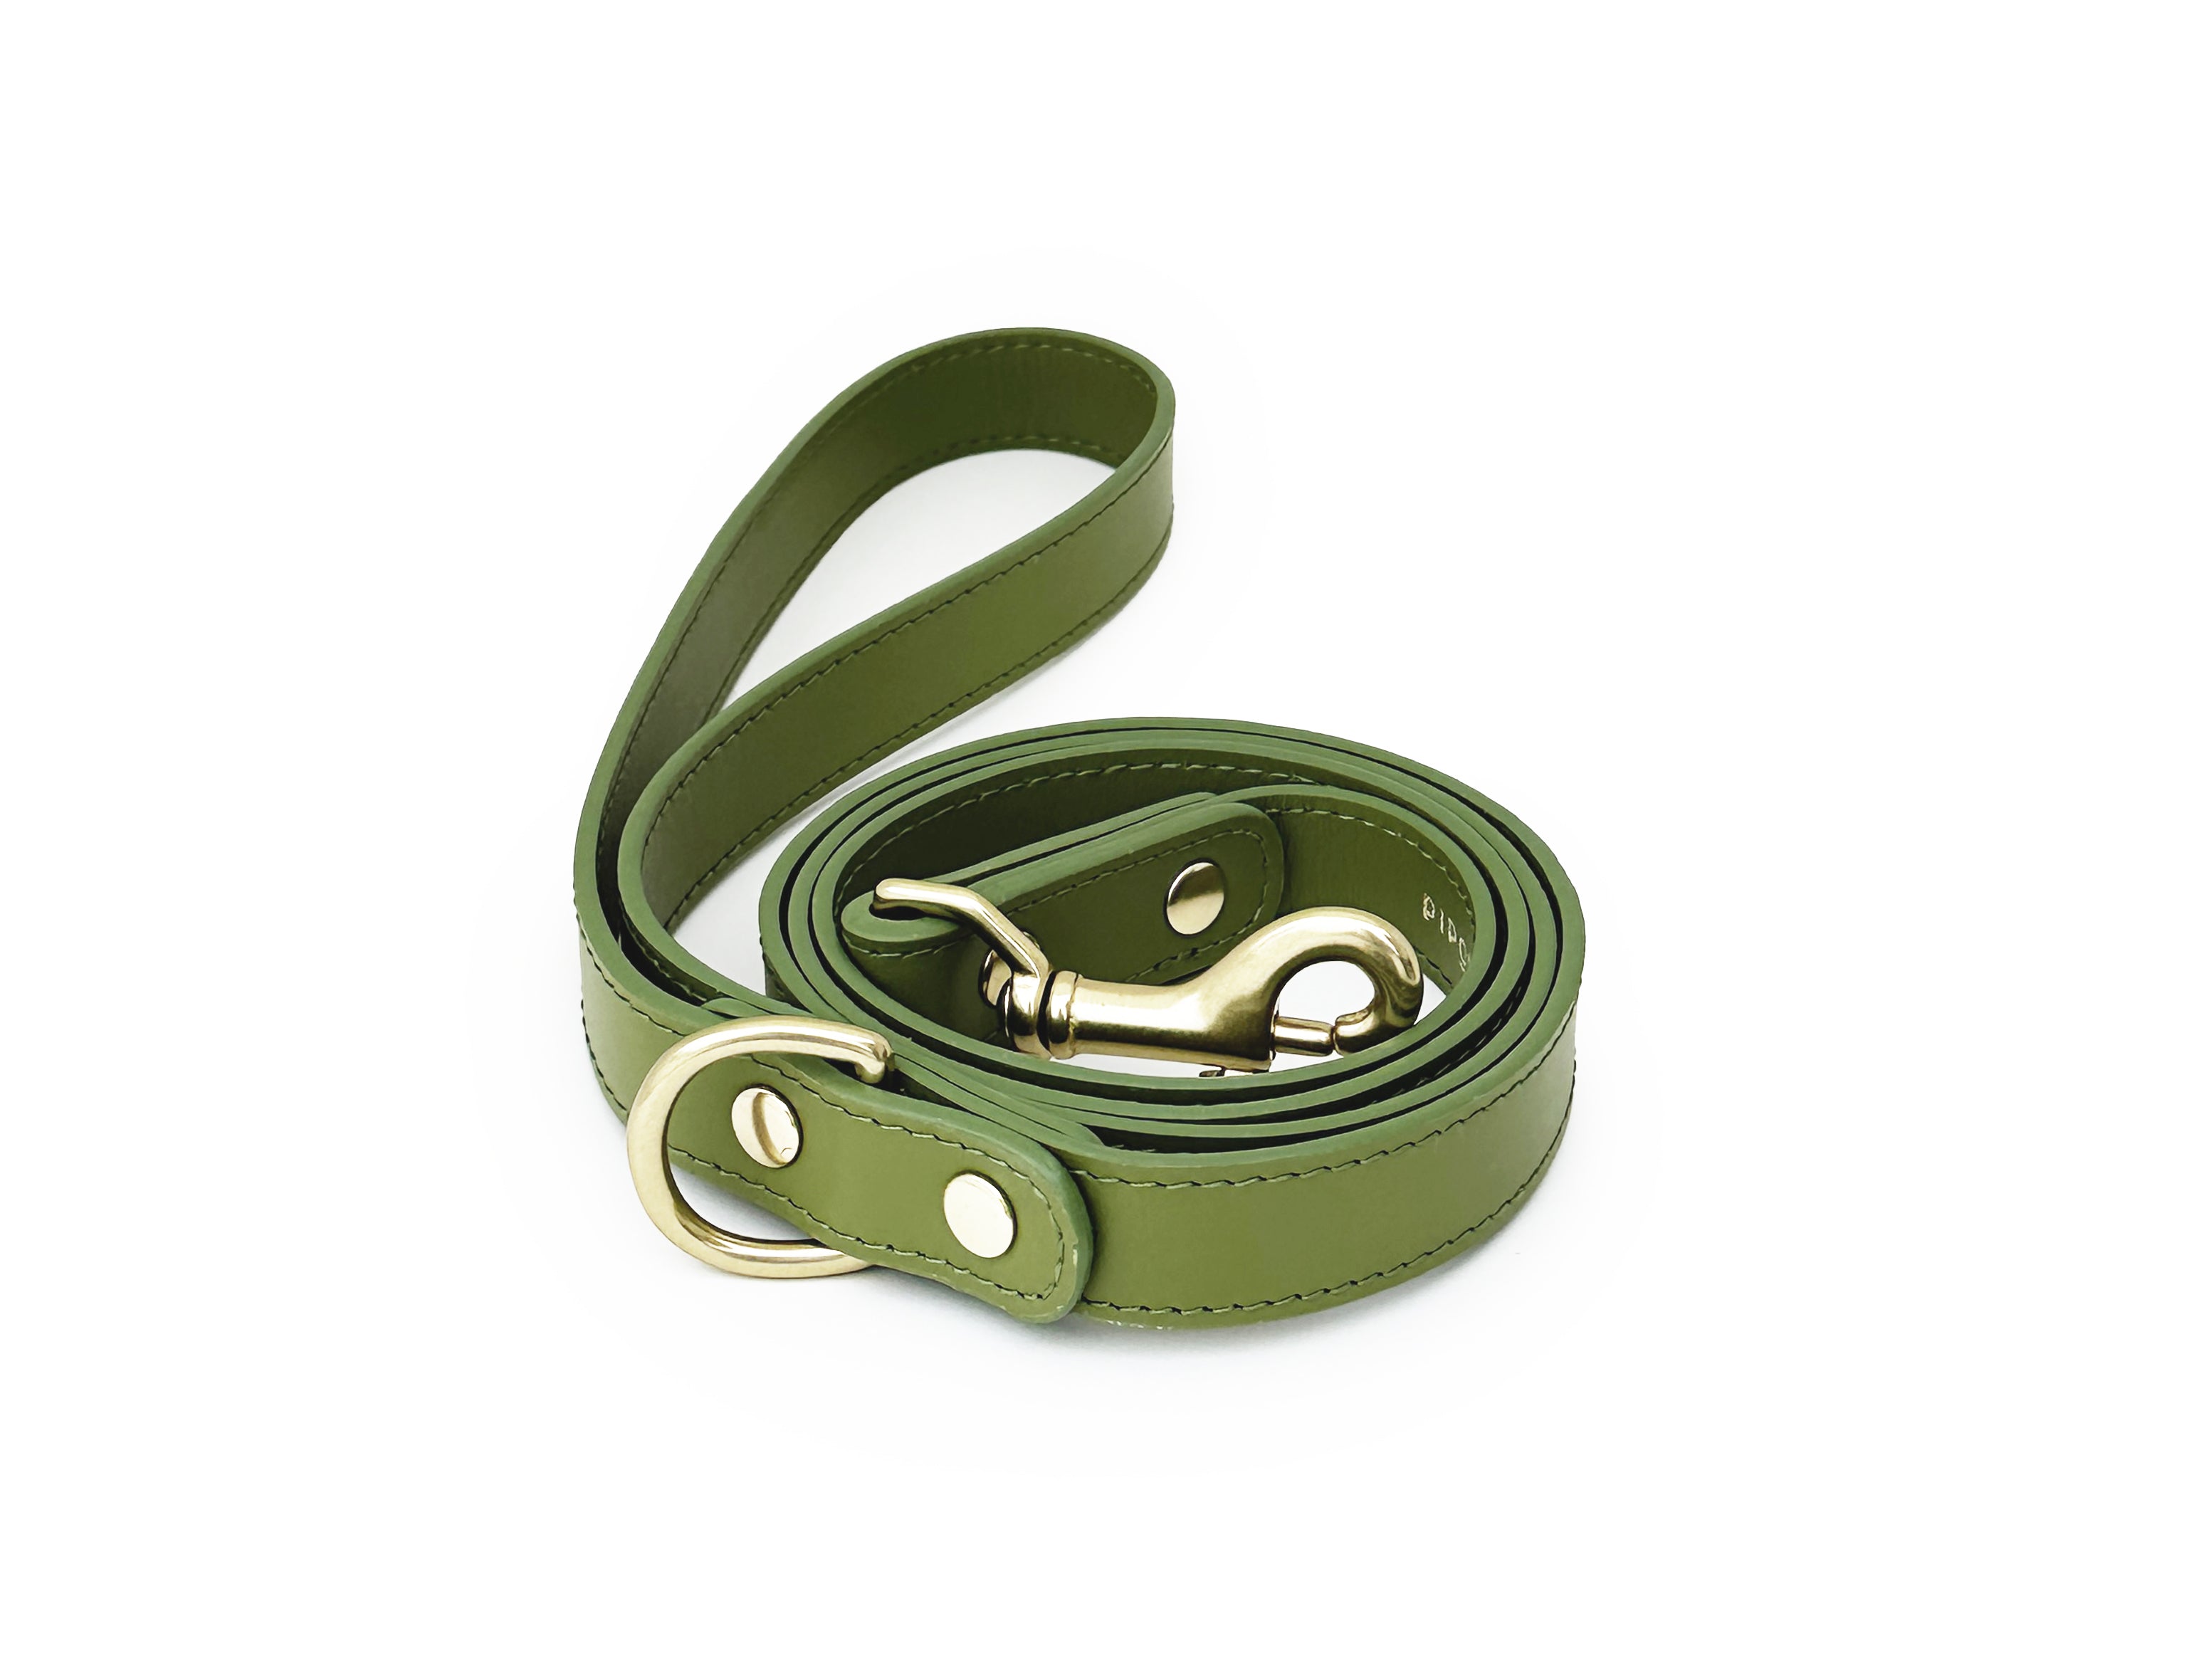 Moss Green leather leash